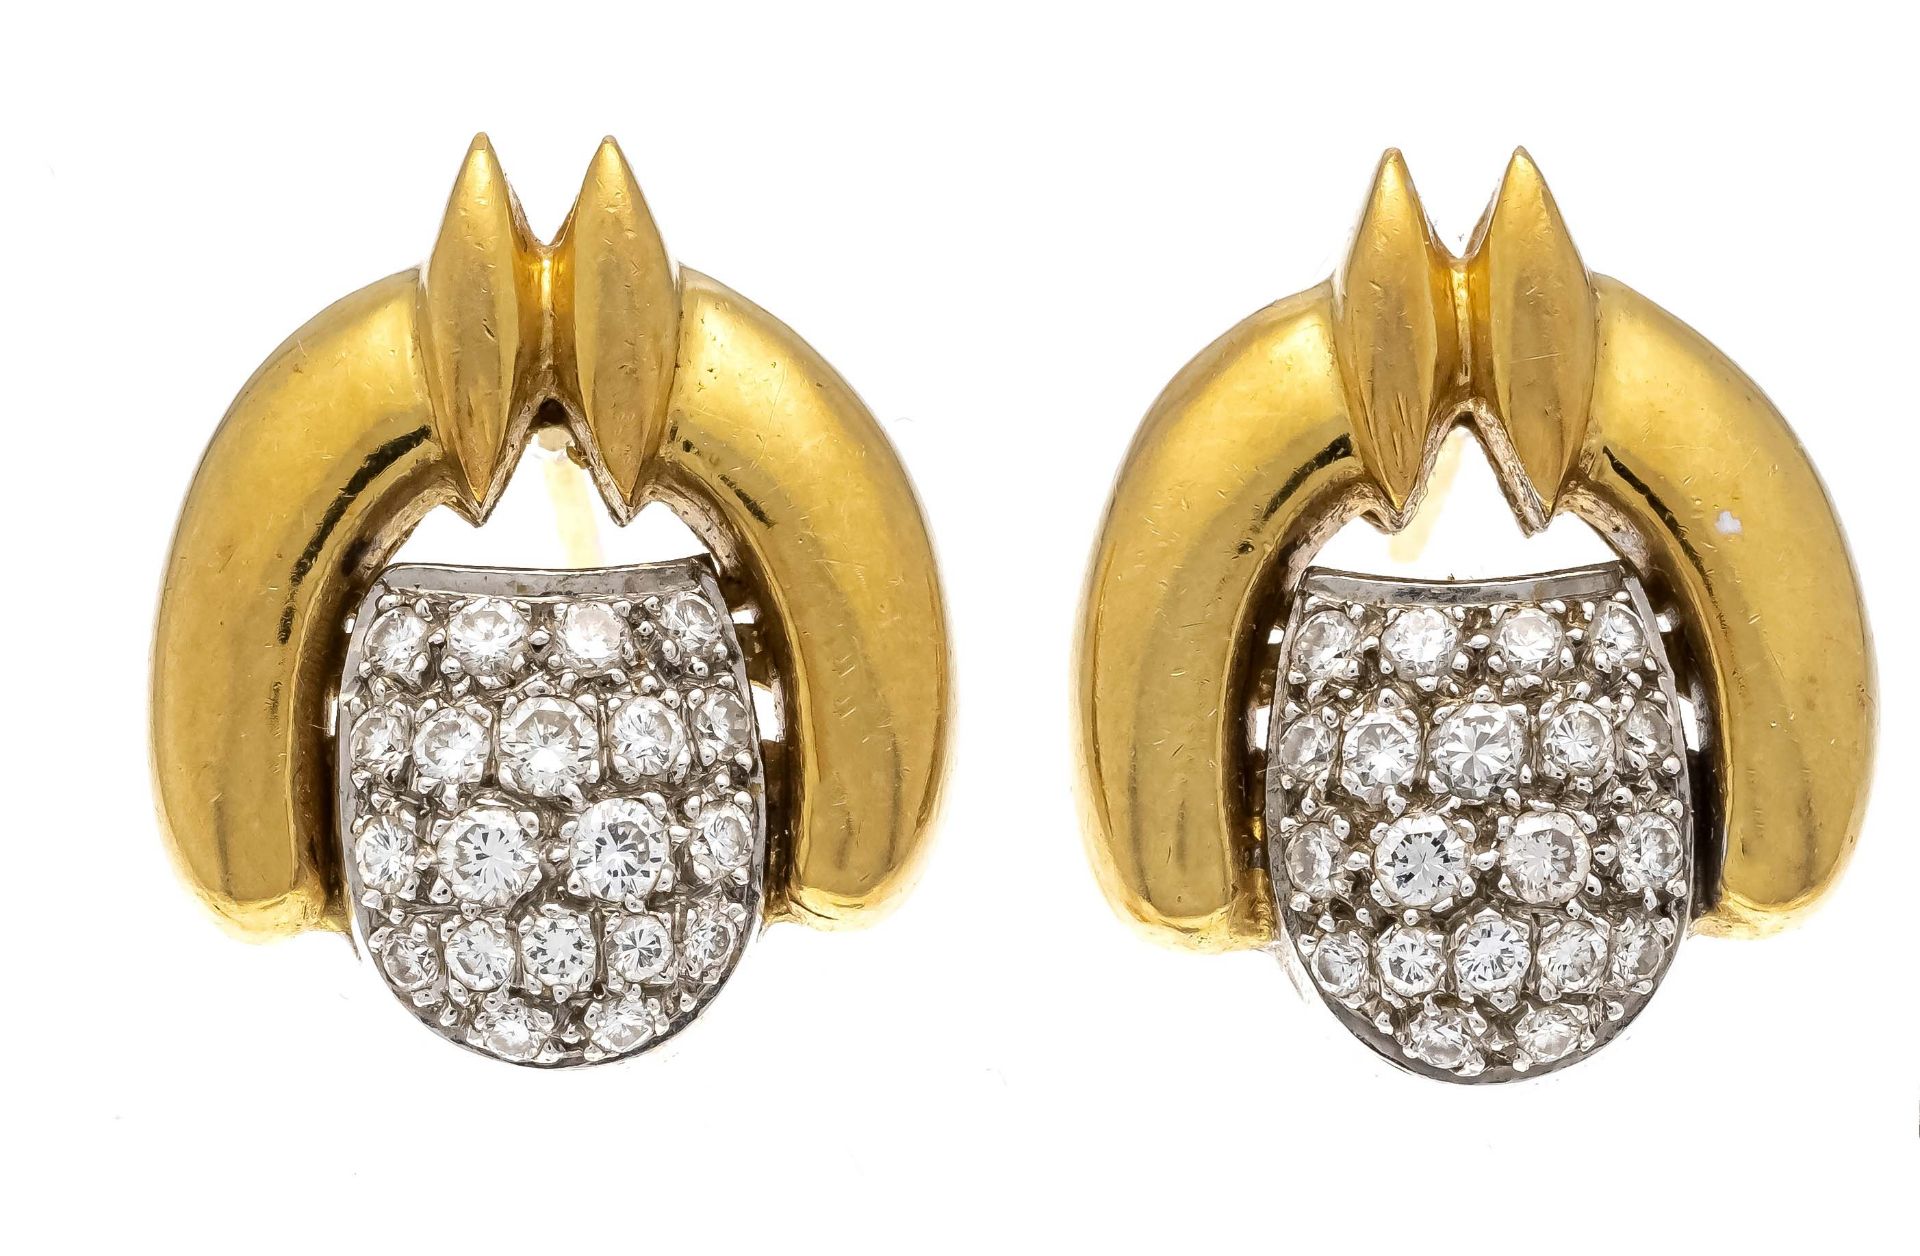 Brilliant earrings GG/WG 750/000 with 40 brilliant-cut diamonds, add. 0.50 ct l.tinted W-toned/VS-